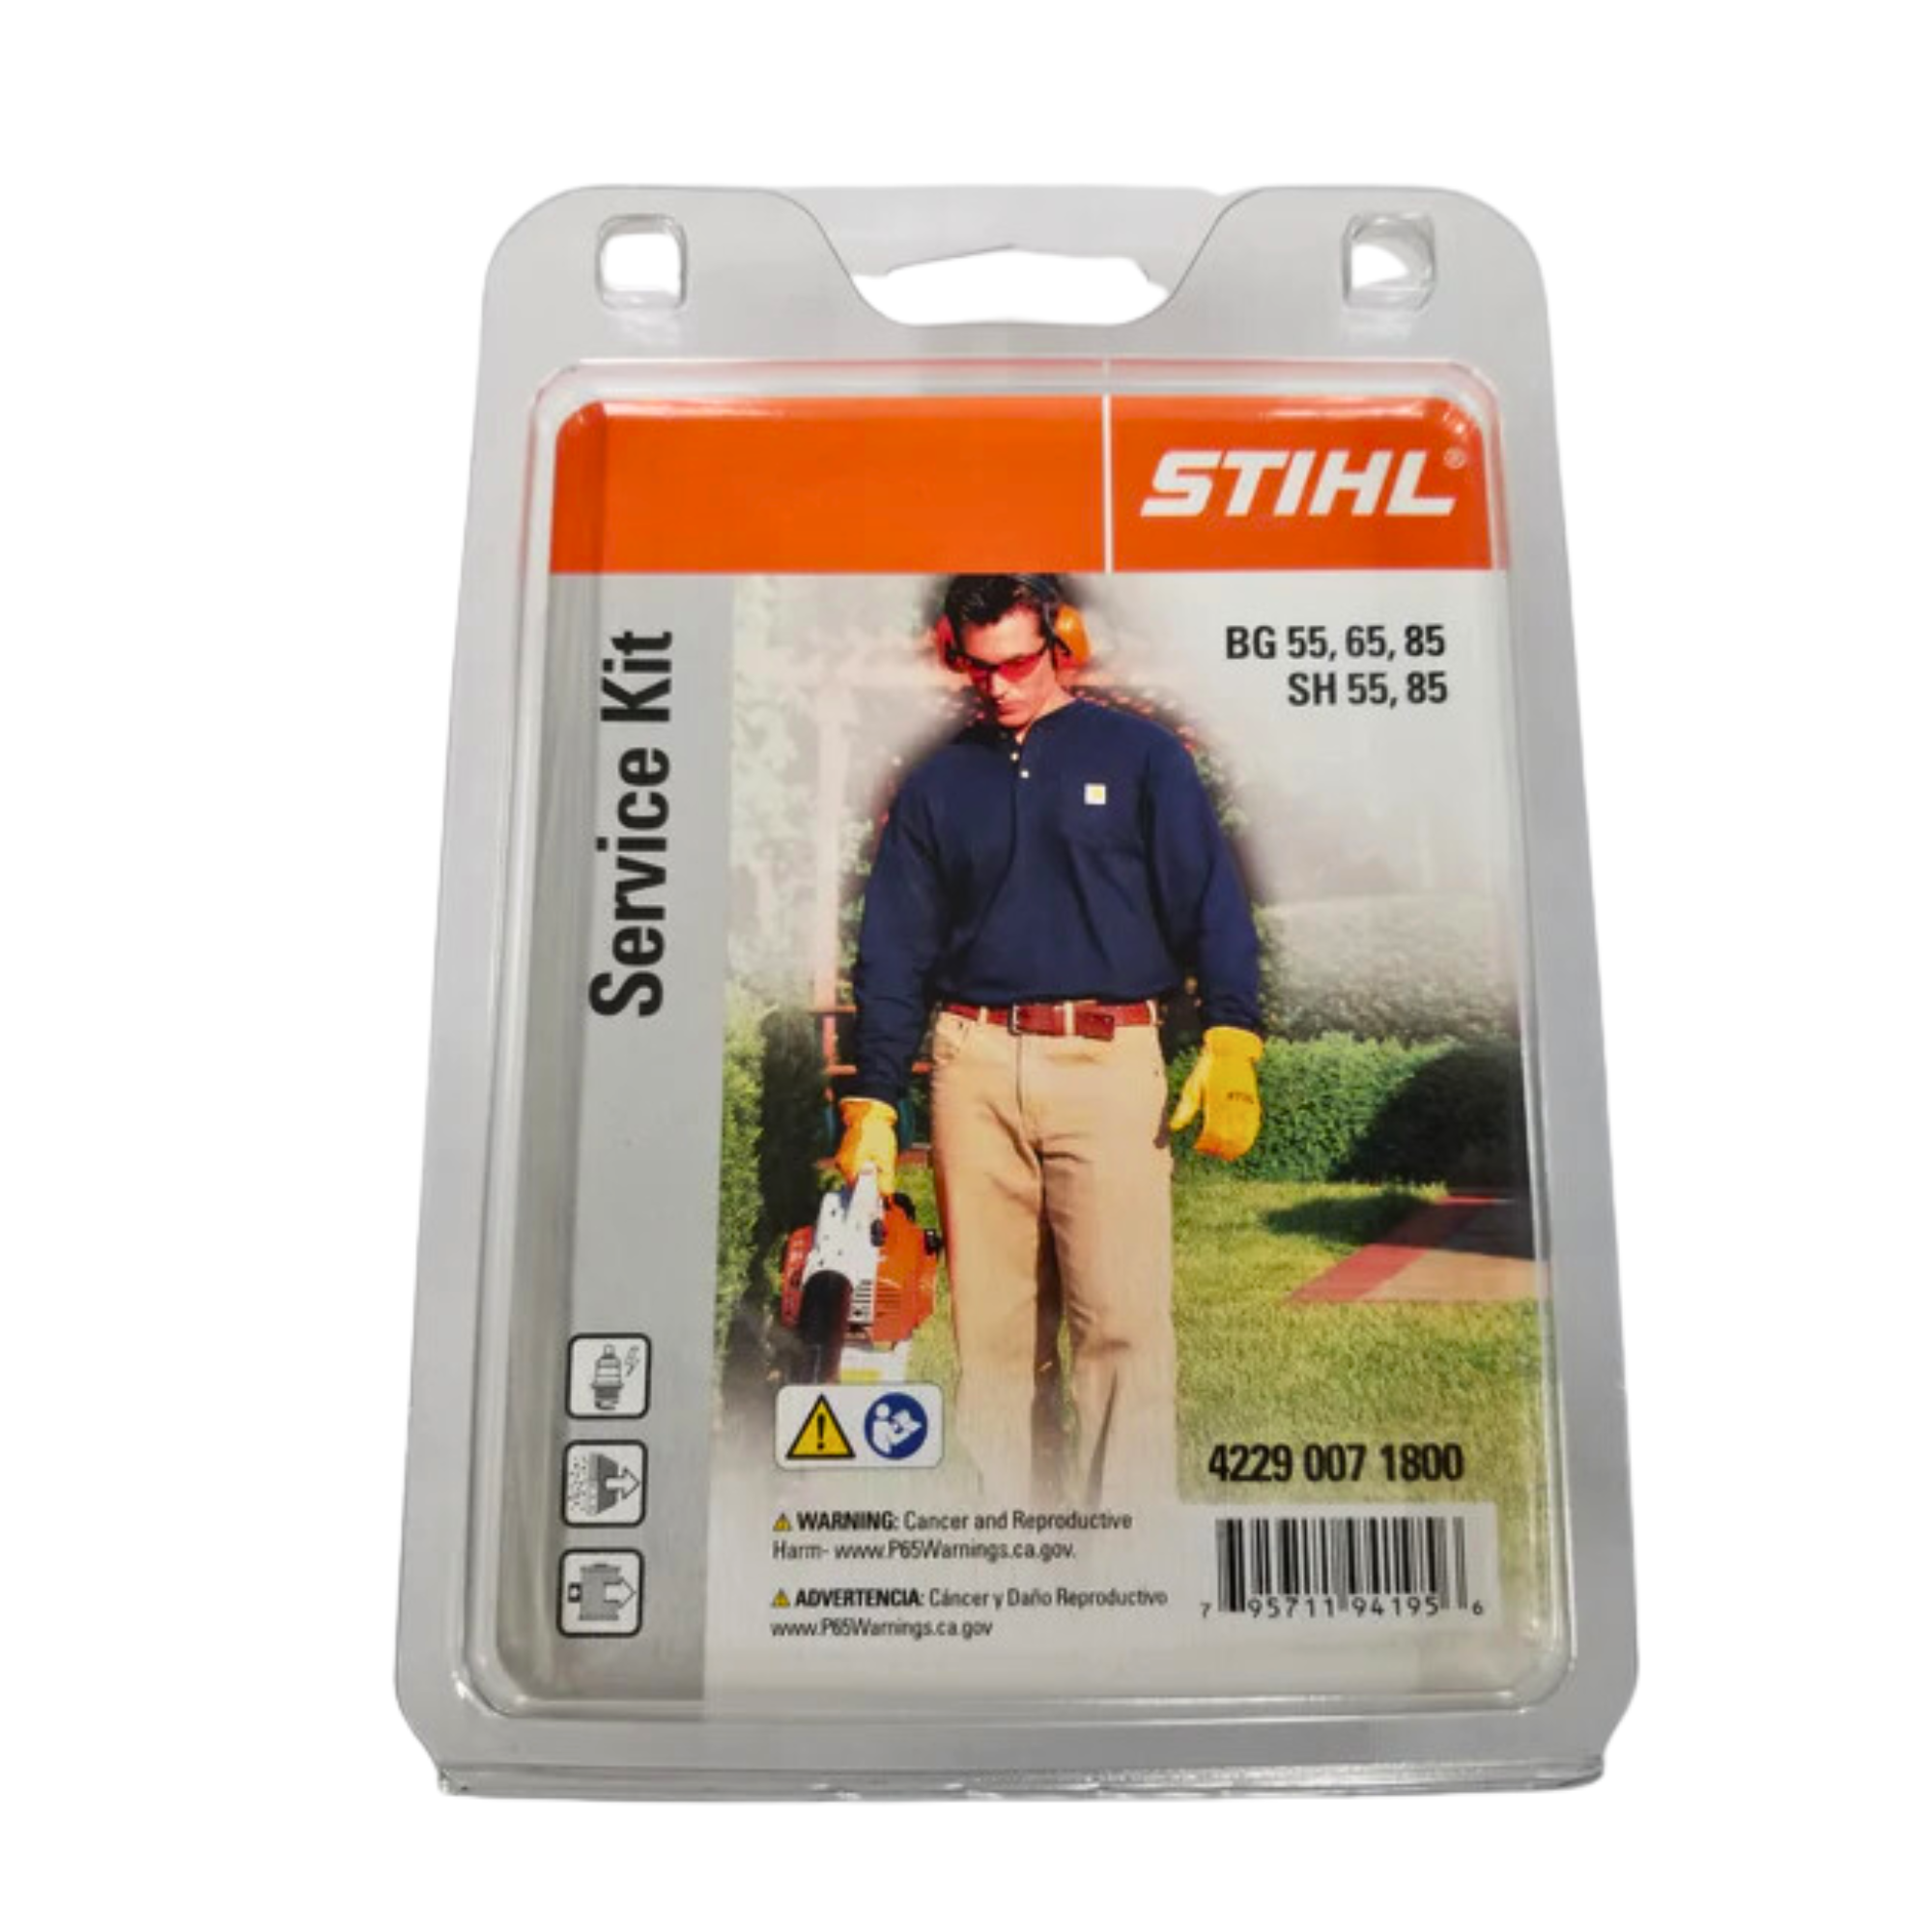 Stihl Blower Service Kit 4229 Series | 4229 007 1800